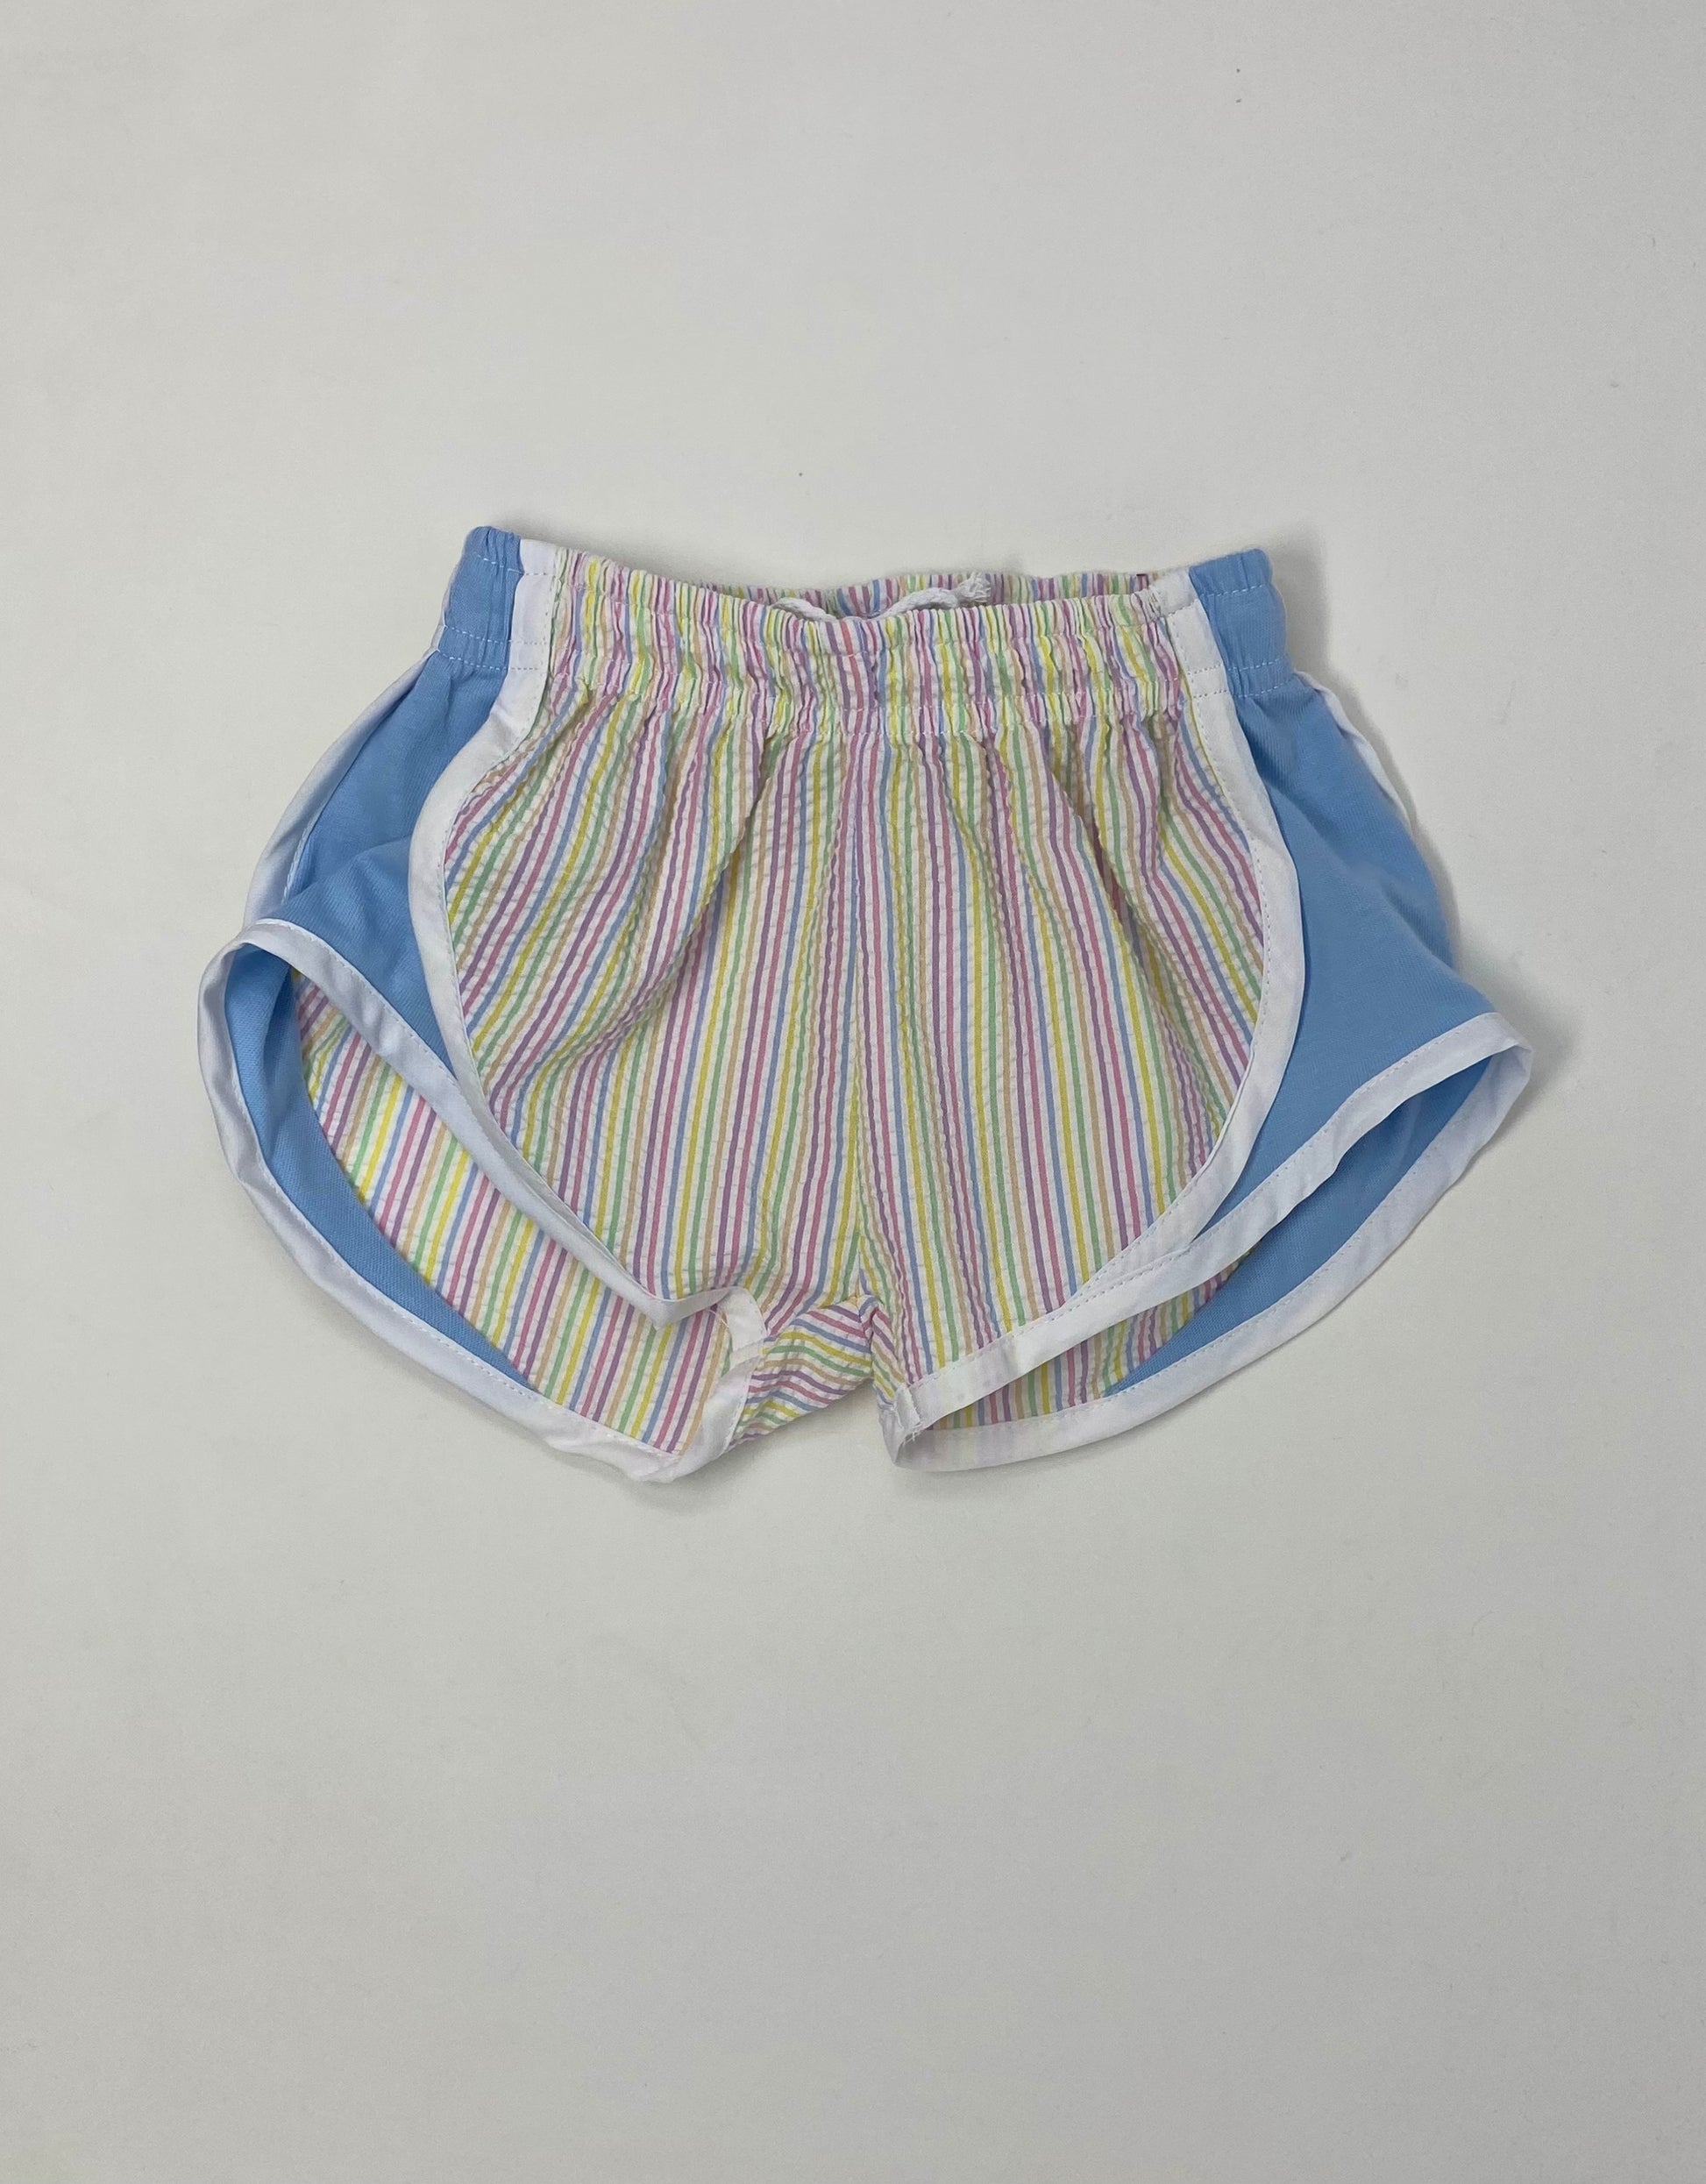 Multi Stripe Athletic Shorts with Blue Sides Girls Shorts Funtasia Too   